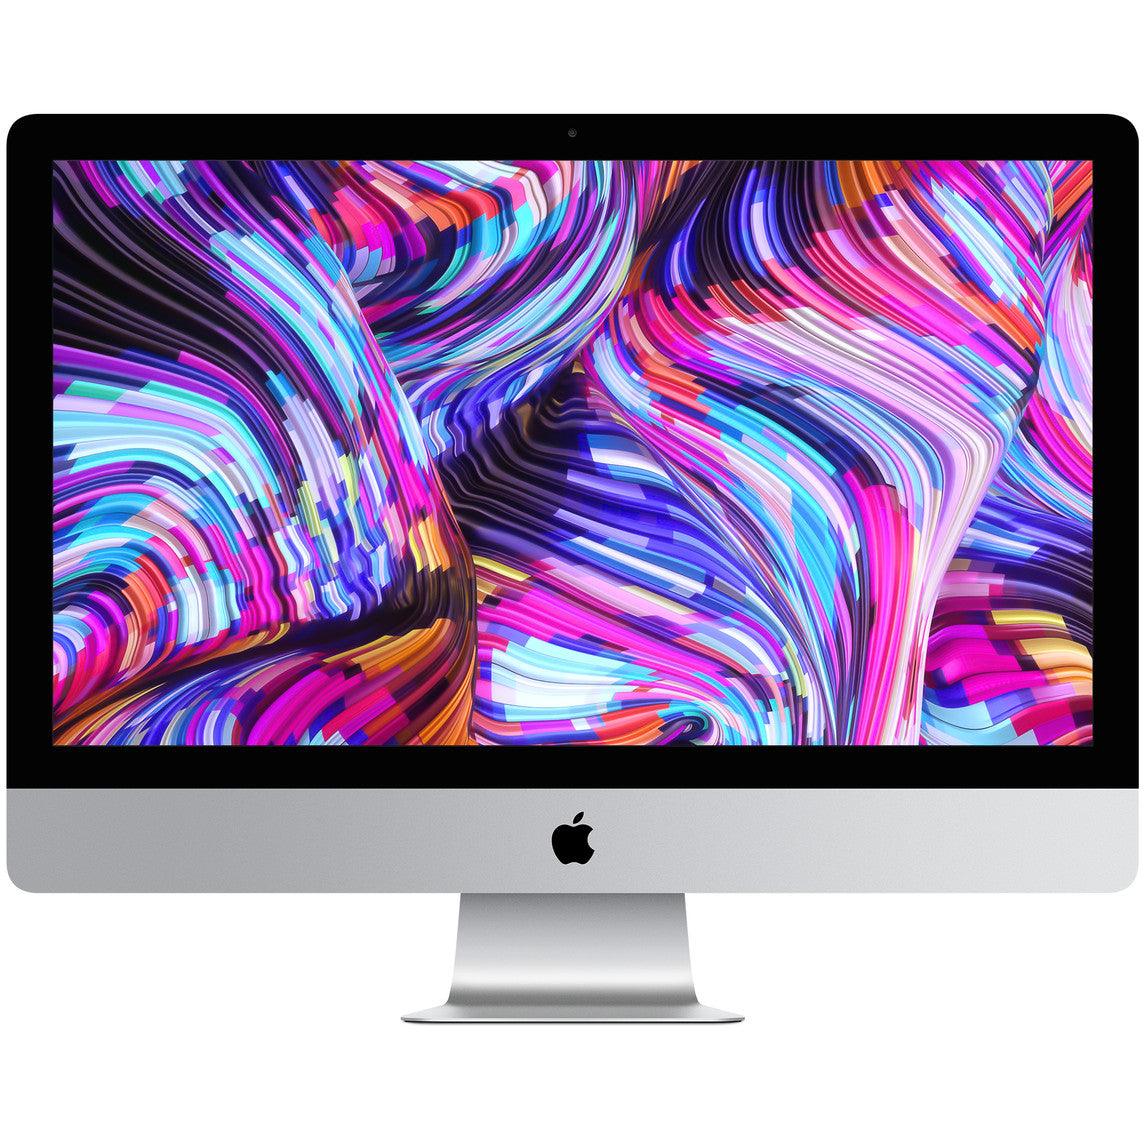 iMac 21.5", late 2014 model